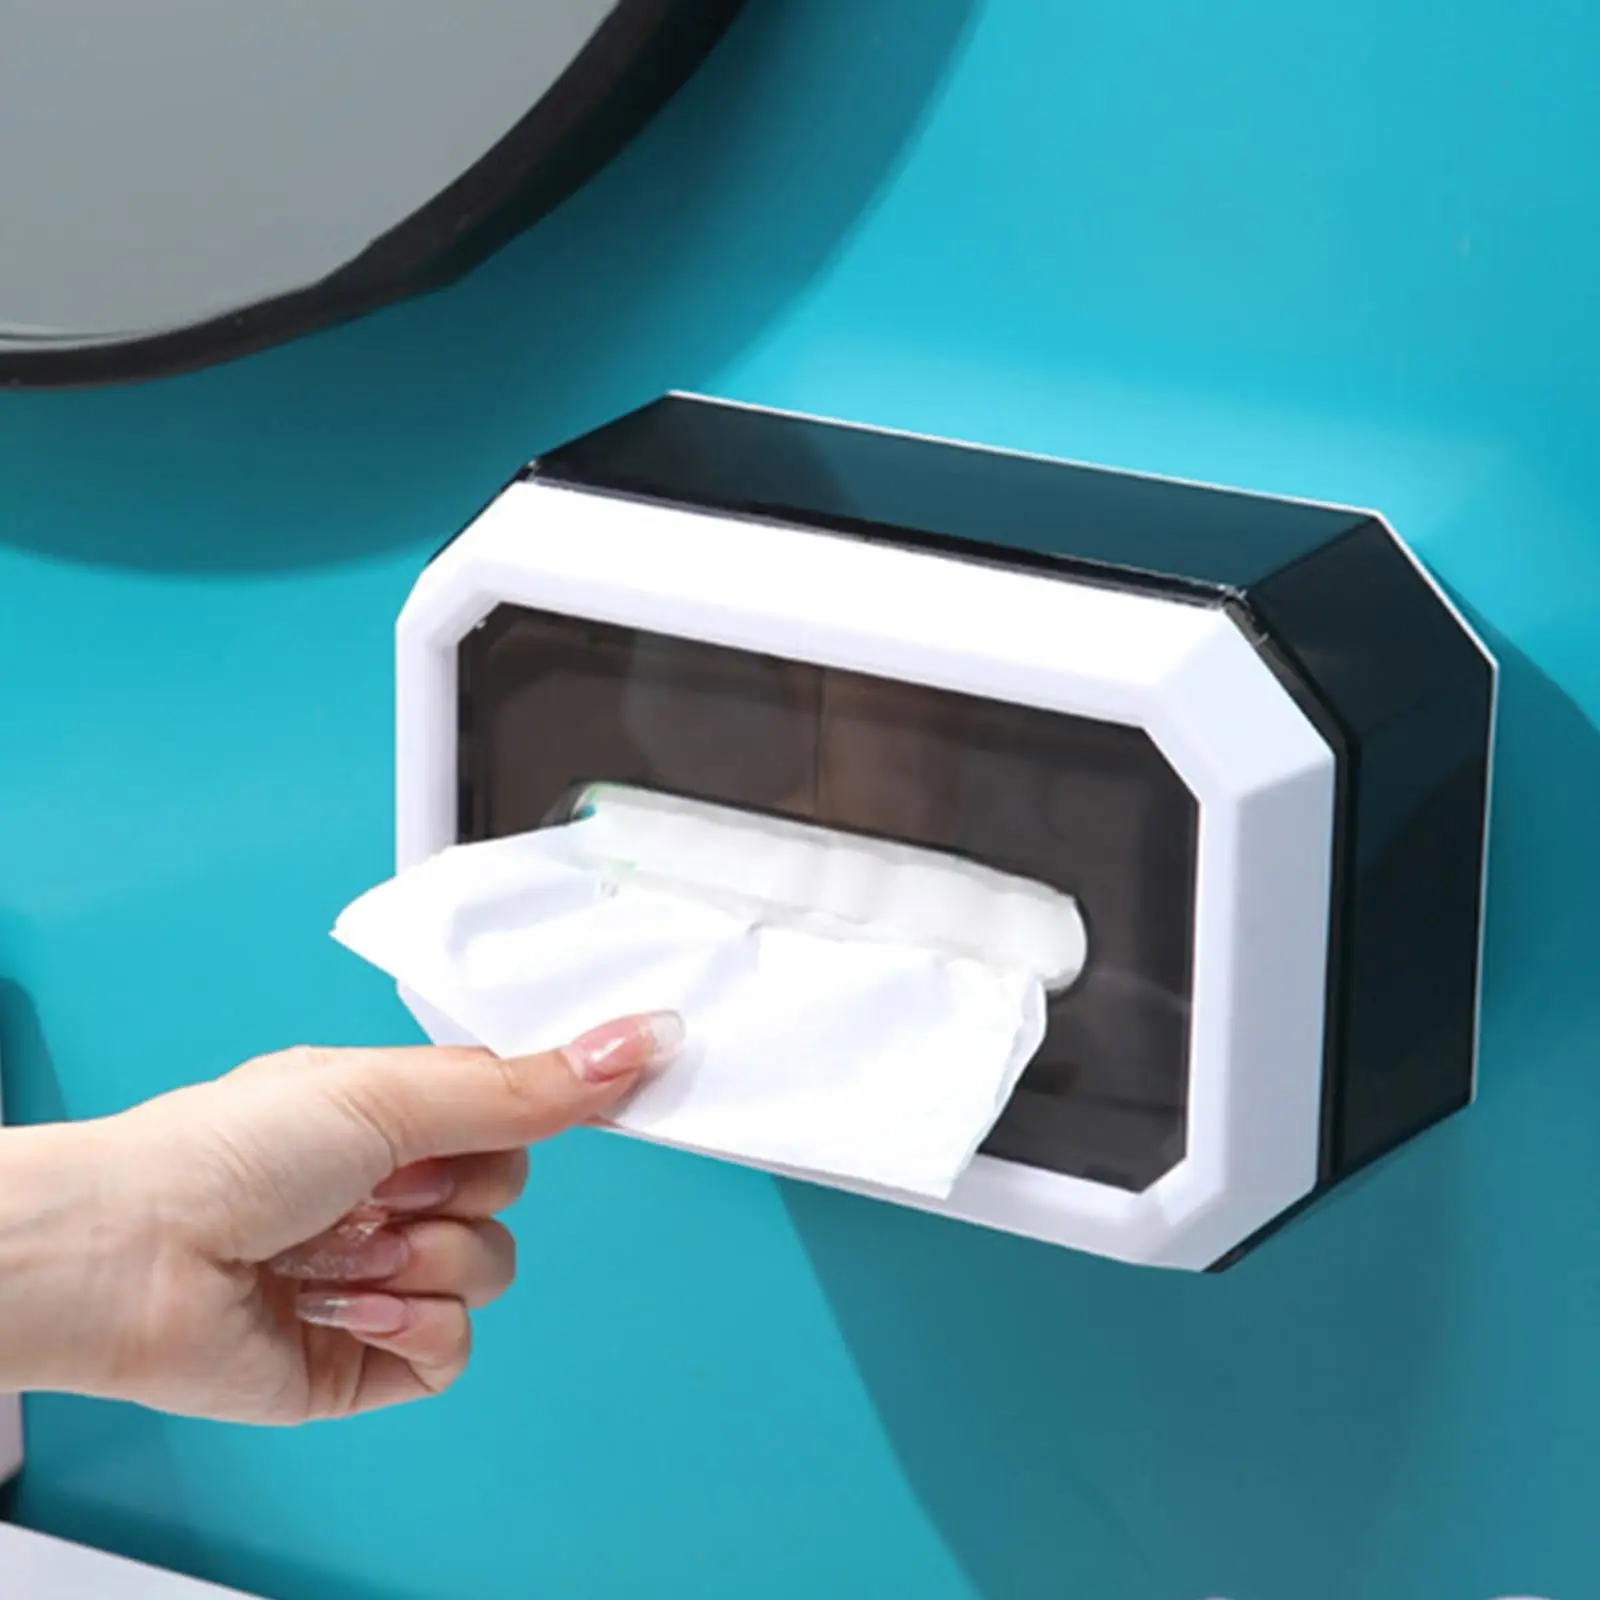 Tissue Dispenser Holder with spring Mounted paper Holder Toilet Paper Organizer Case for Kitchen Office Restaurant Decoration